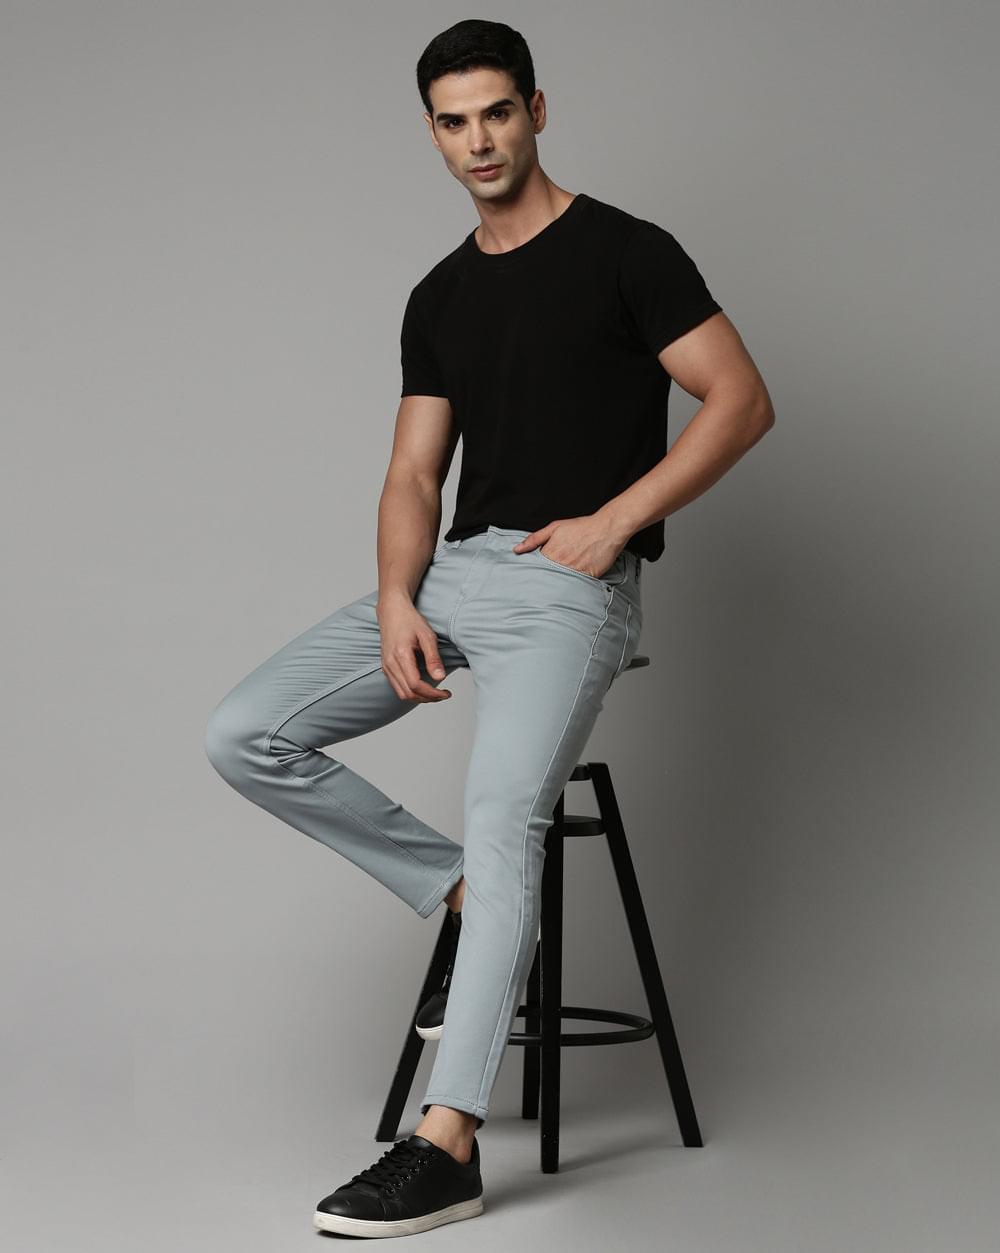 Slim Fit Dark Blue Color with White Shade Design Premium Class Denim J –  Peplos Jeans